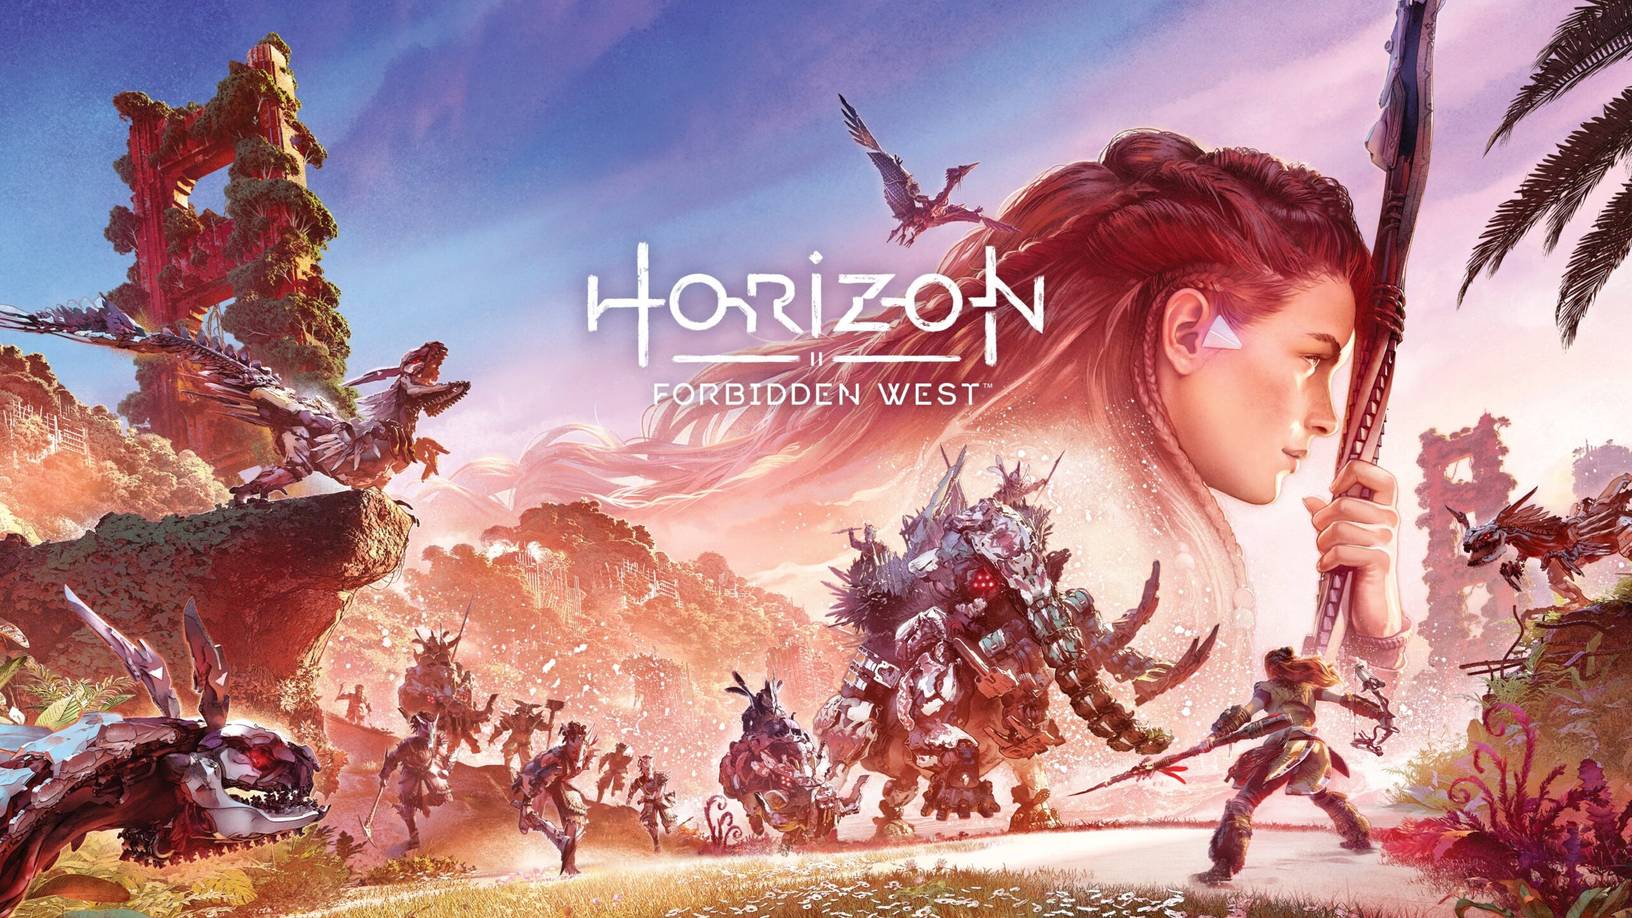 Horizon Forbidden West เปิดให้สั่งจองล่วงหน้าแล้ว เริ่มตั้งแต่วันที่ 14 ธันวาคมนี้บน PS5 และ PS4